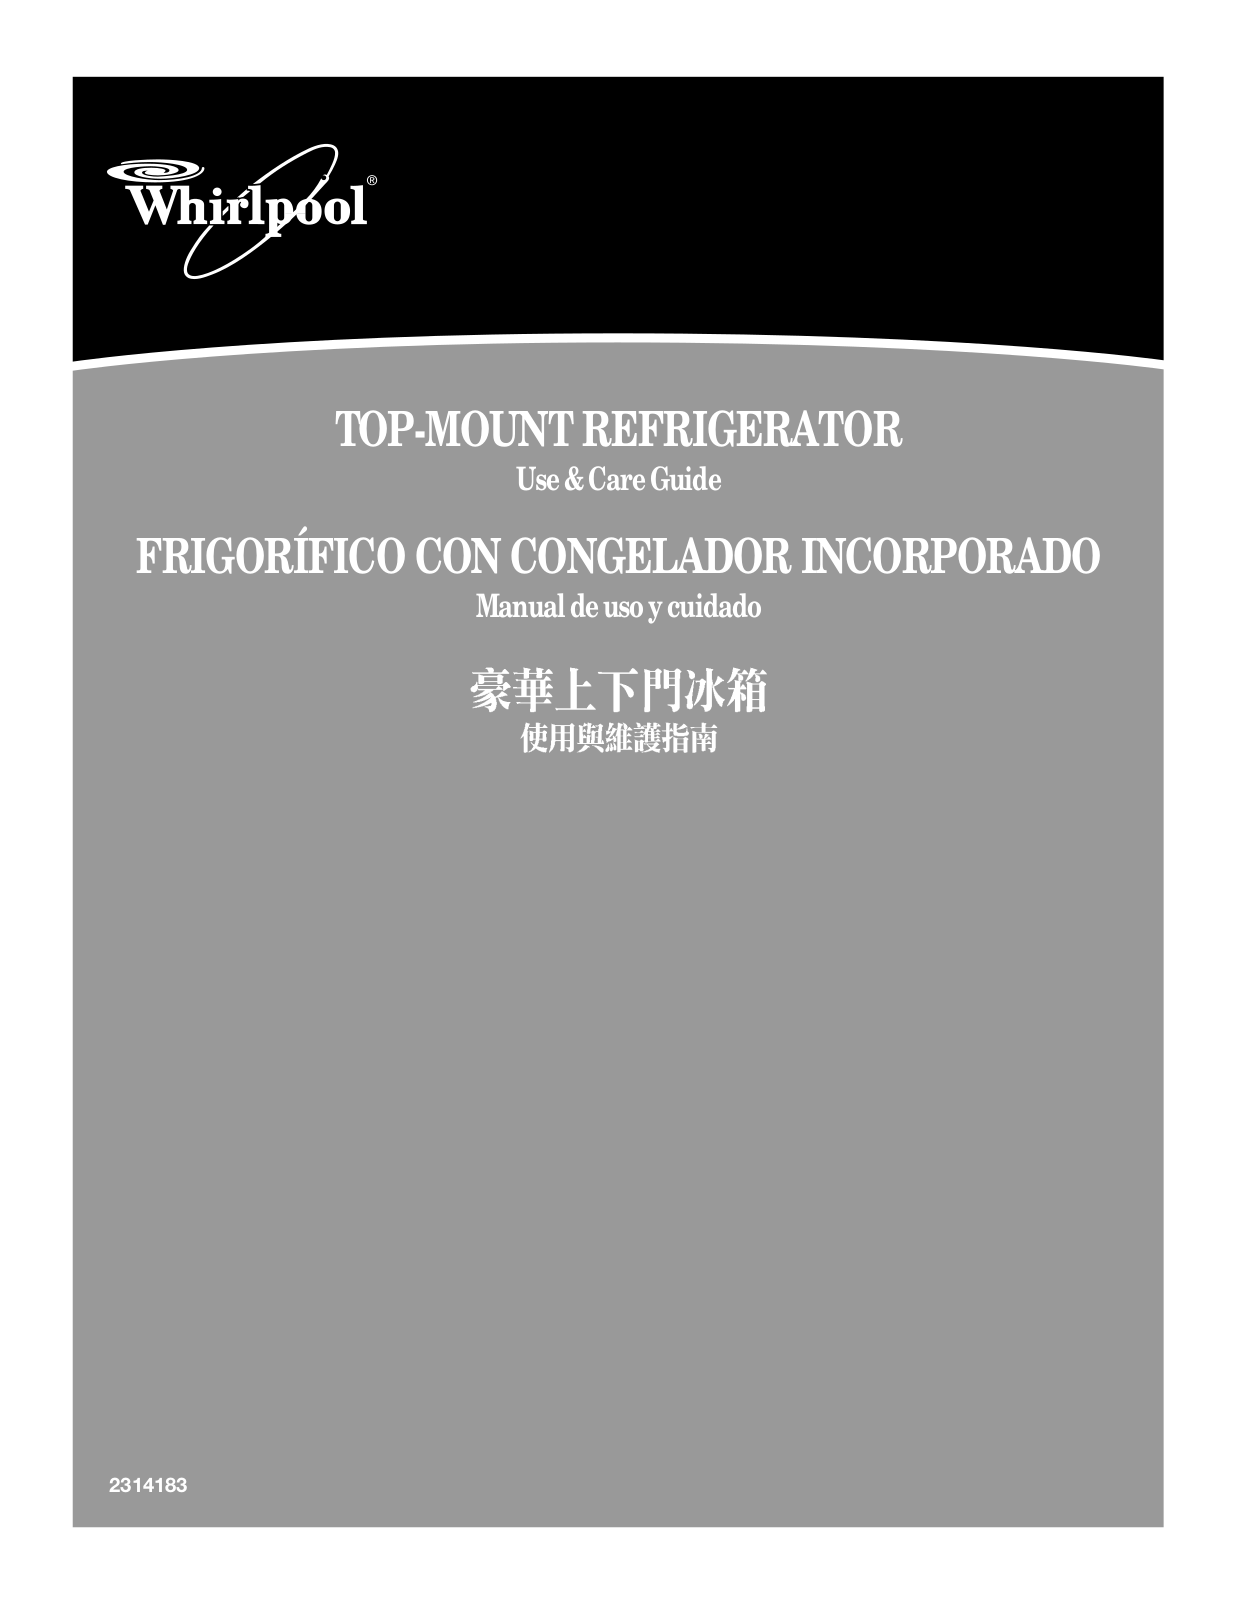 Whirlpool 2314183, 338, Refrigerator User Manual